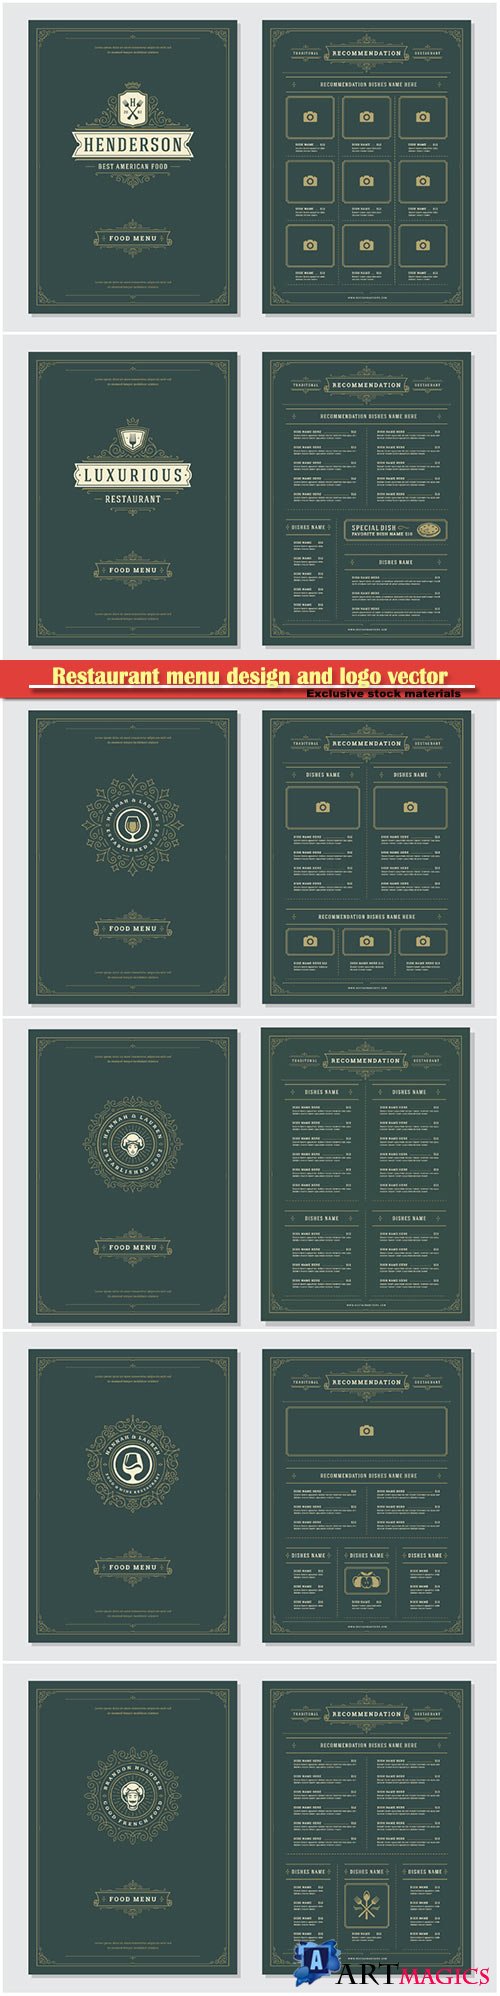 Restaurant menu design and logo vector brochure template